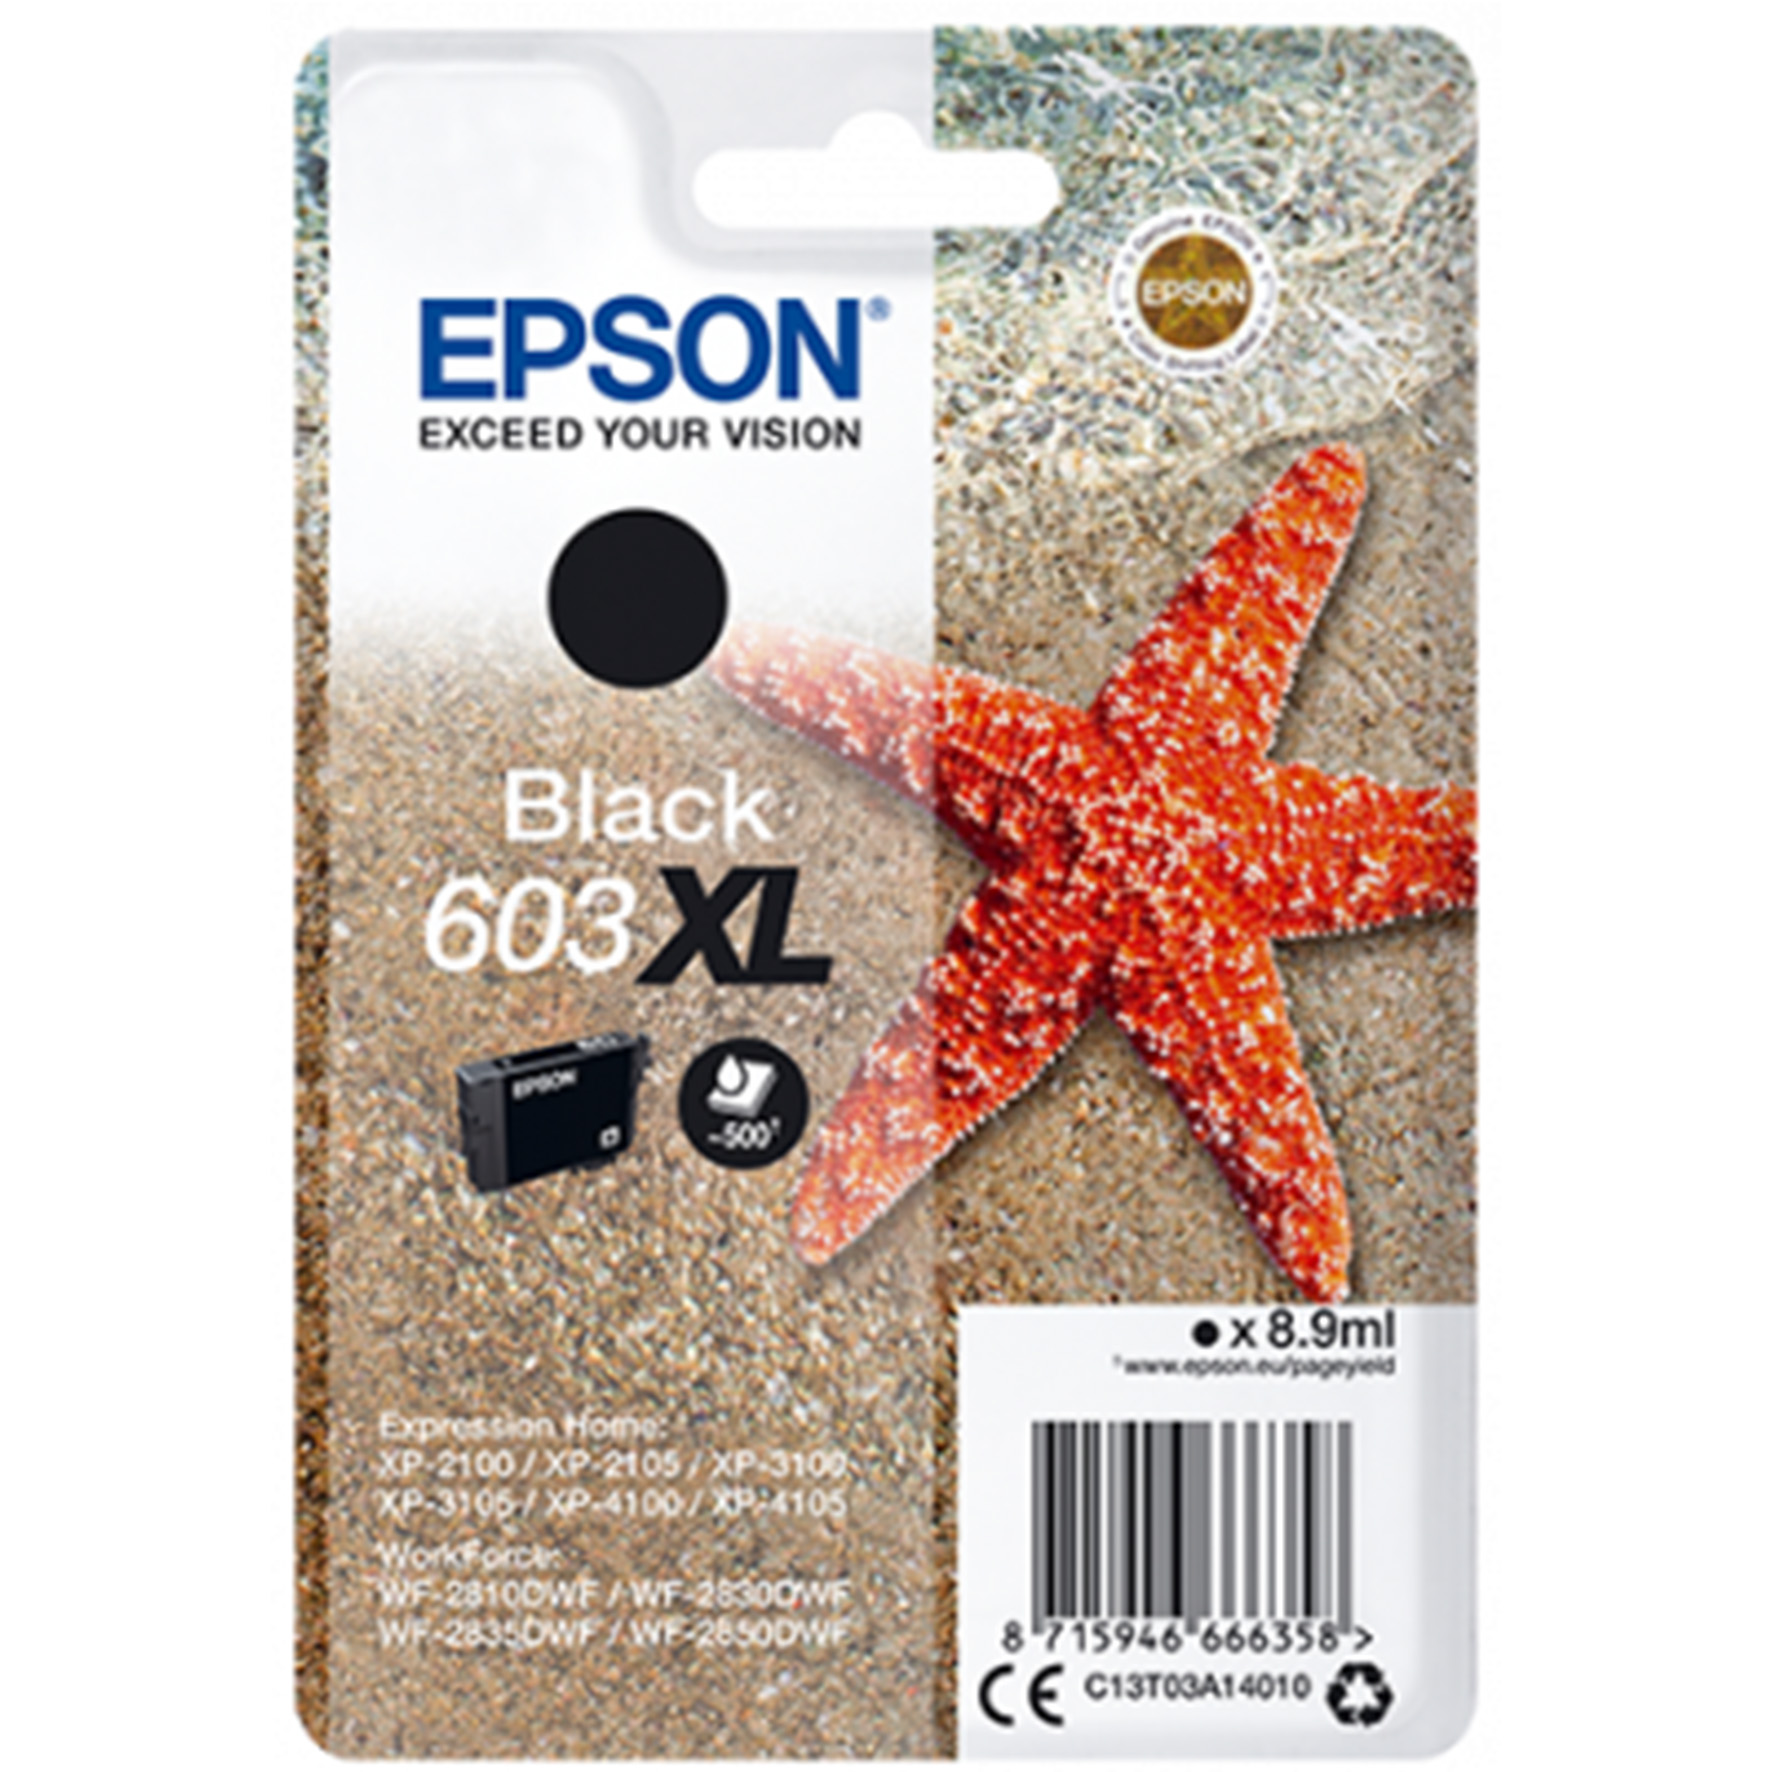 [5701538] Bläck Epson 603XL svart 8,9ml